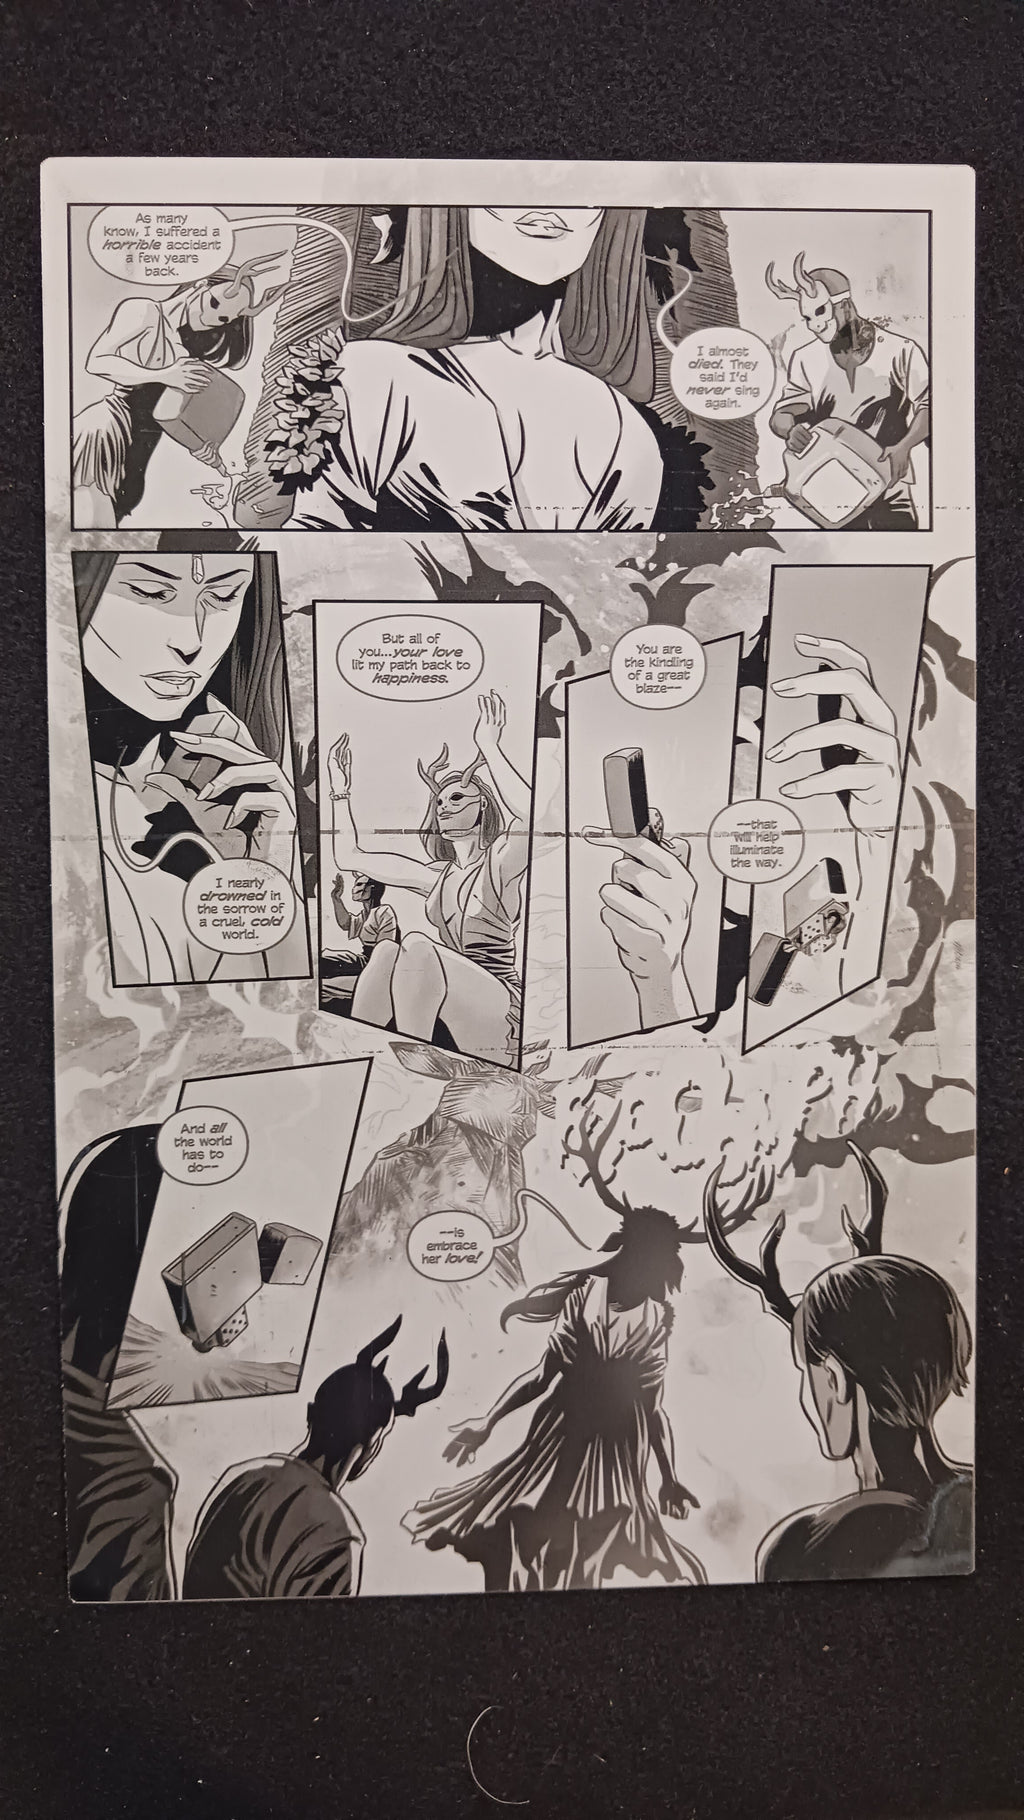 Killchella #4 - Page 10 - PRESSWORKS - Comic Art - Printer Plate - Black